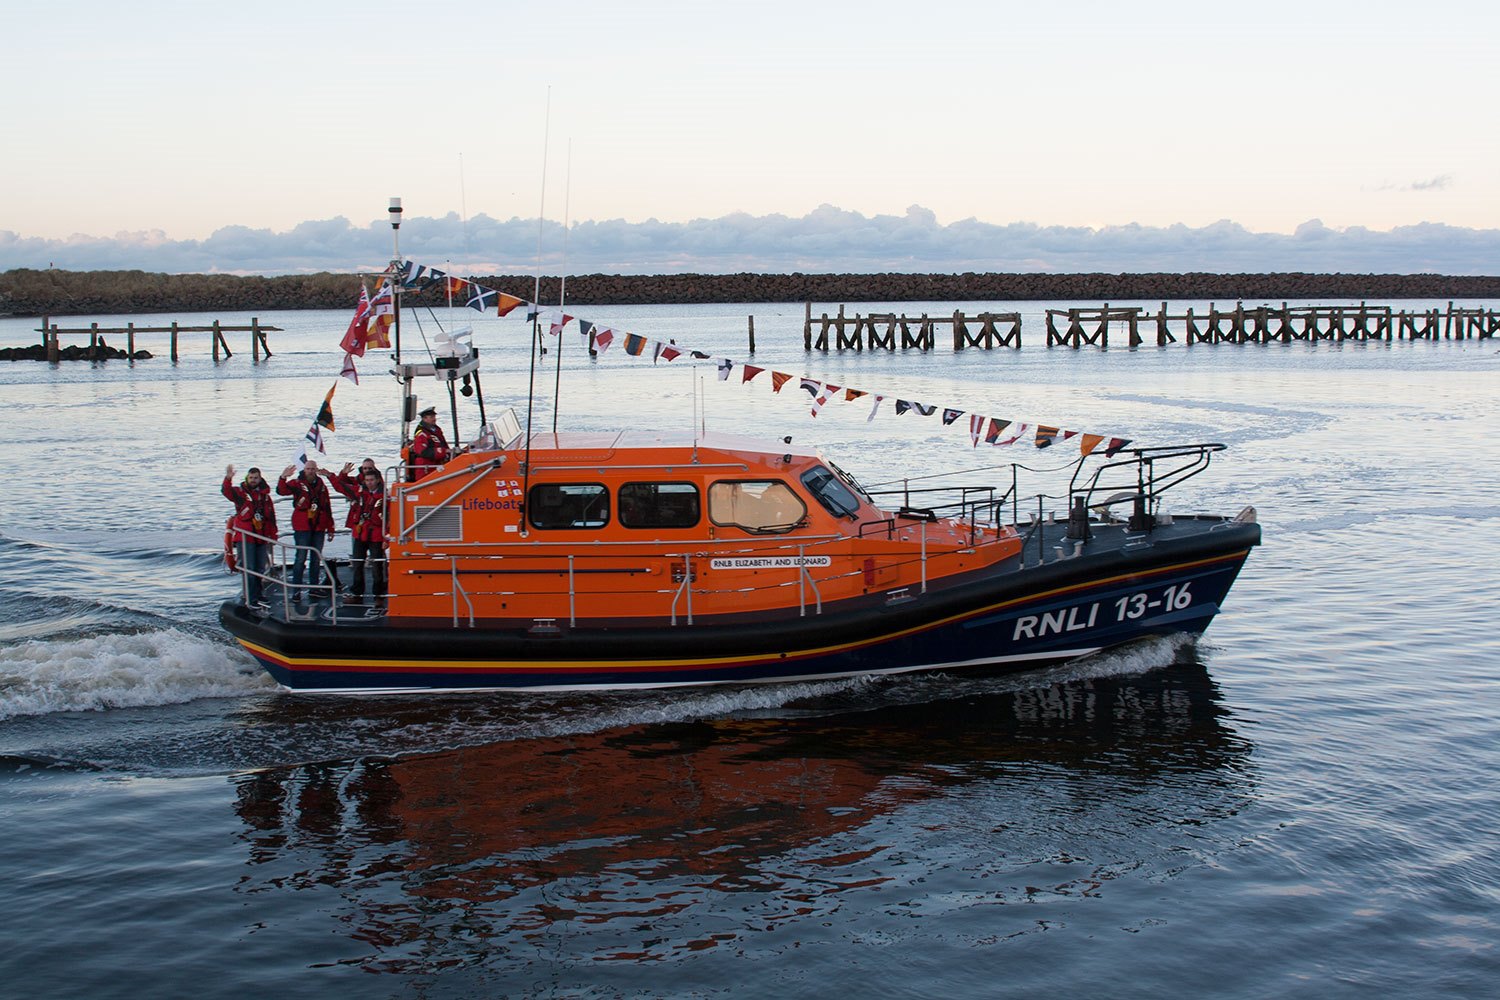 RNLI-1316-lifeboat-crew-waving